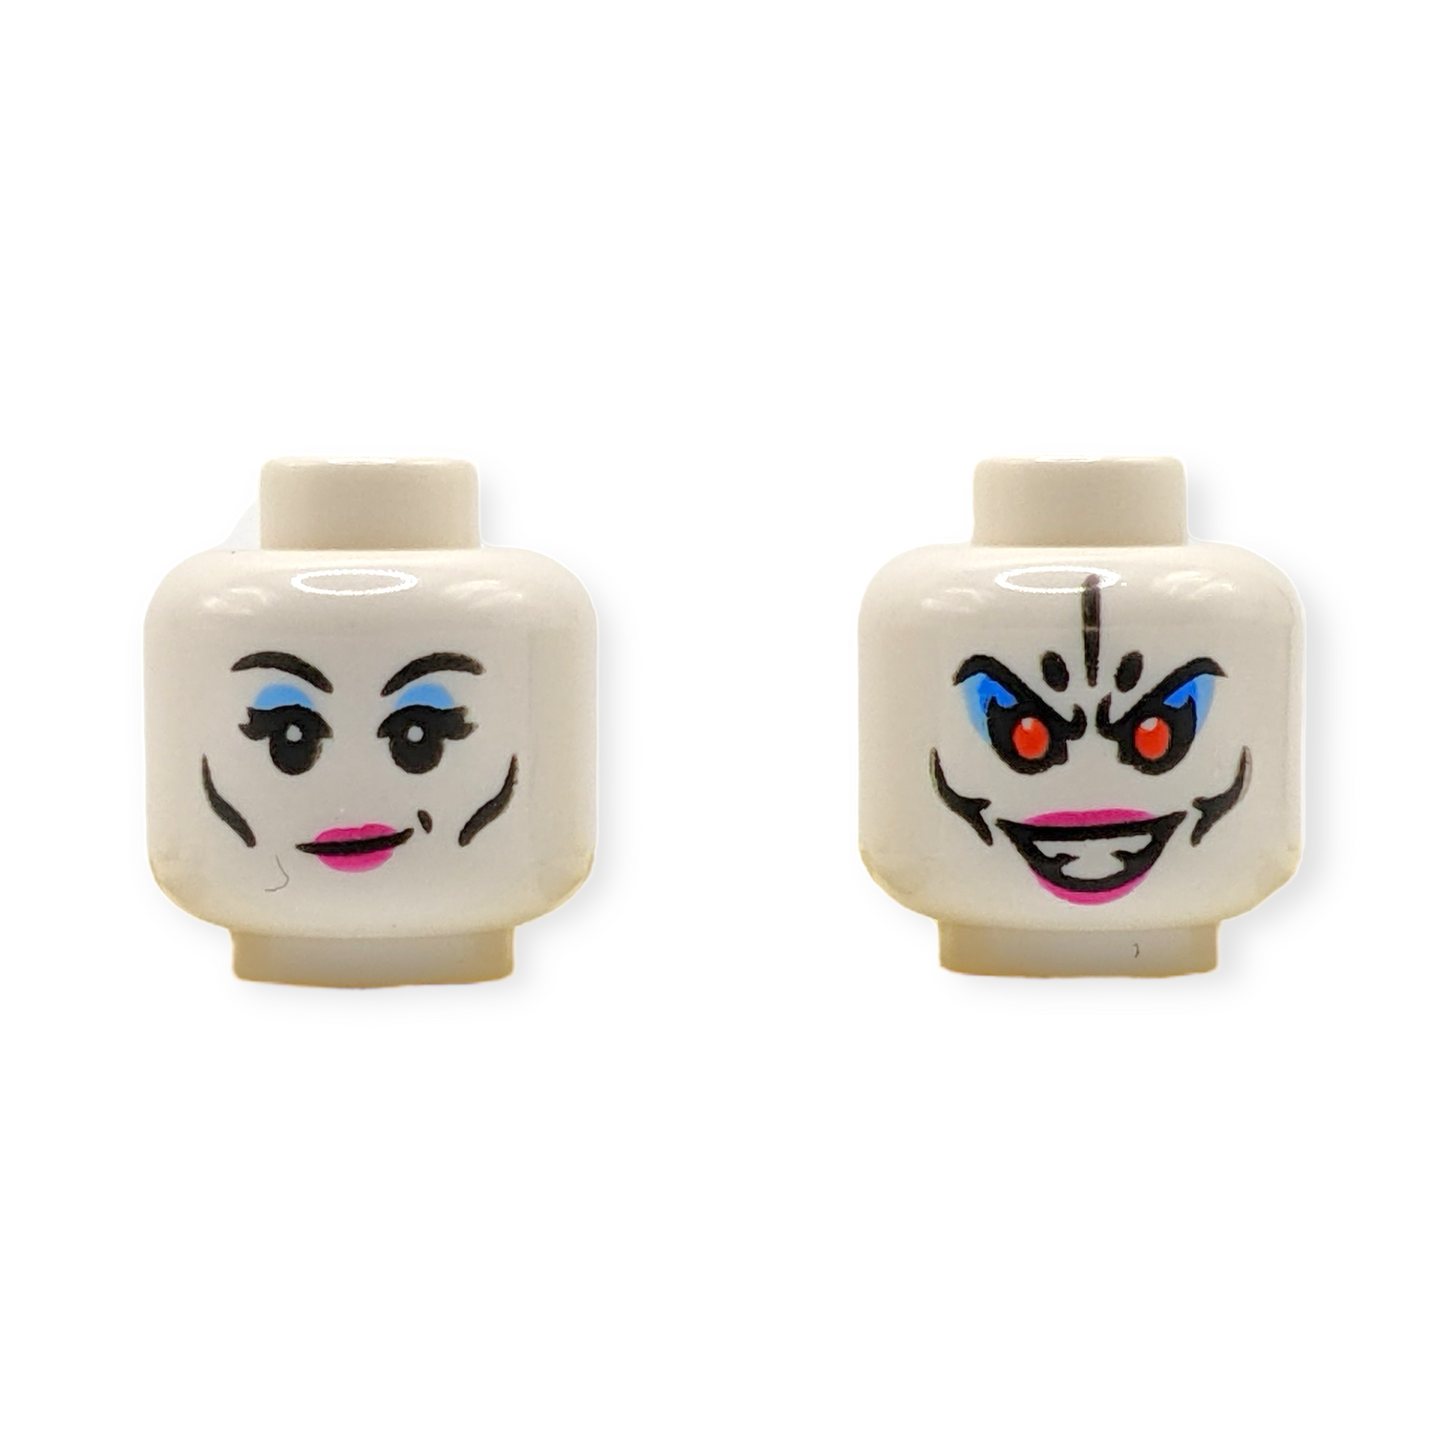 LEGO Head - 3526 Dual Sided Female, Black Eyebrows and Cheek Lines